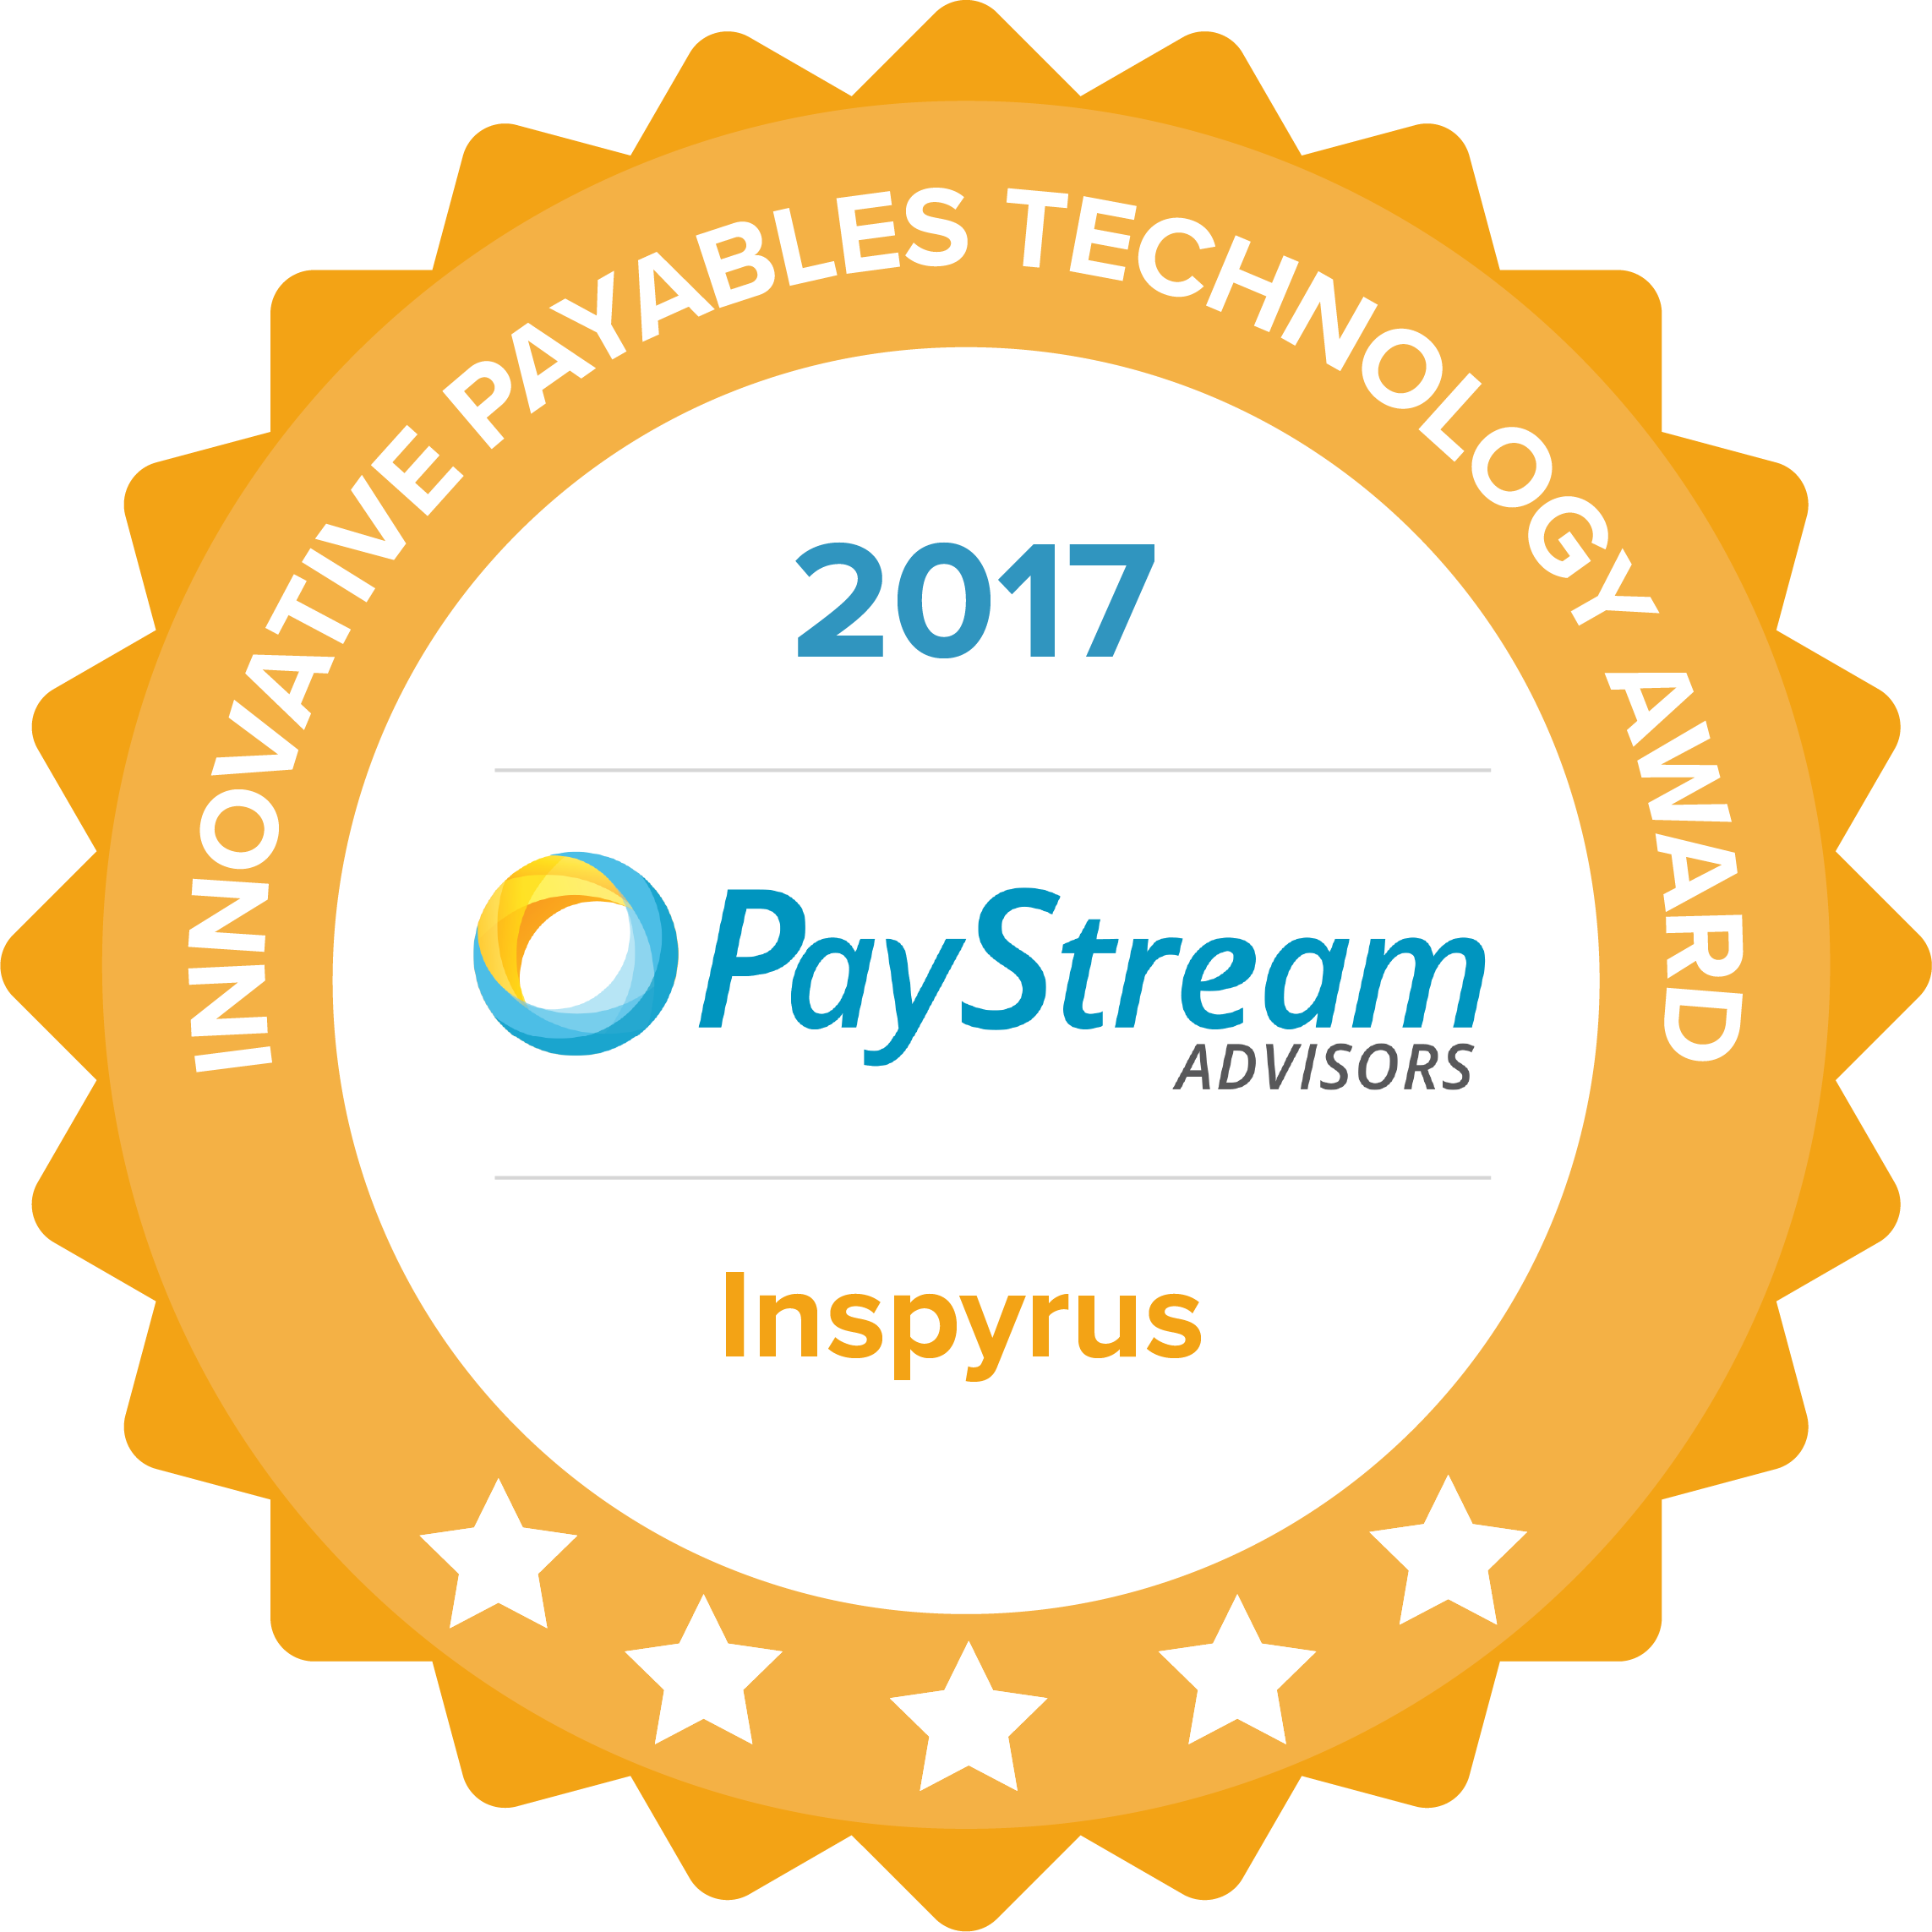 paystream-excellence-award-inspyrus (003)